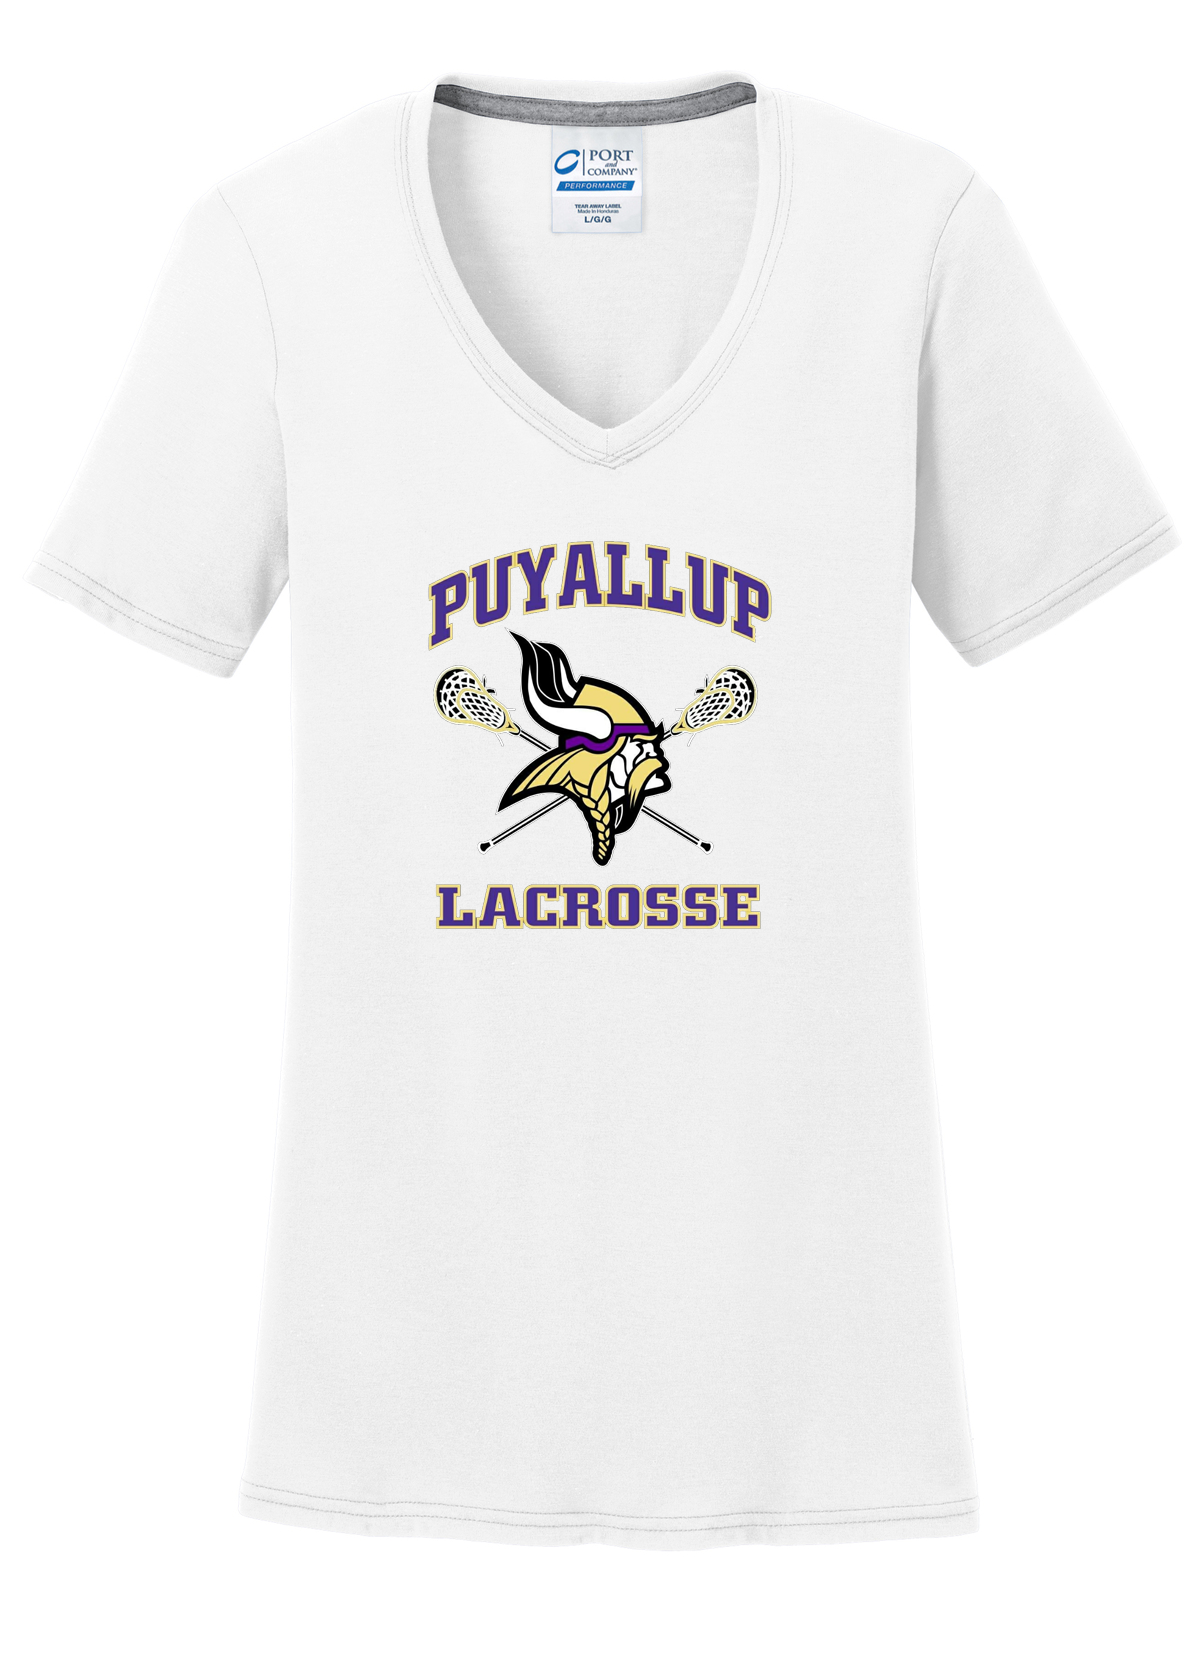 Puyallup Lacrosse Women's White T-Shirt